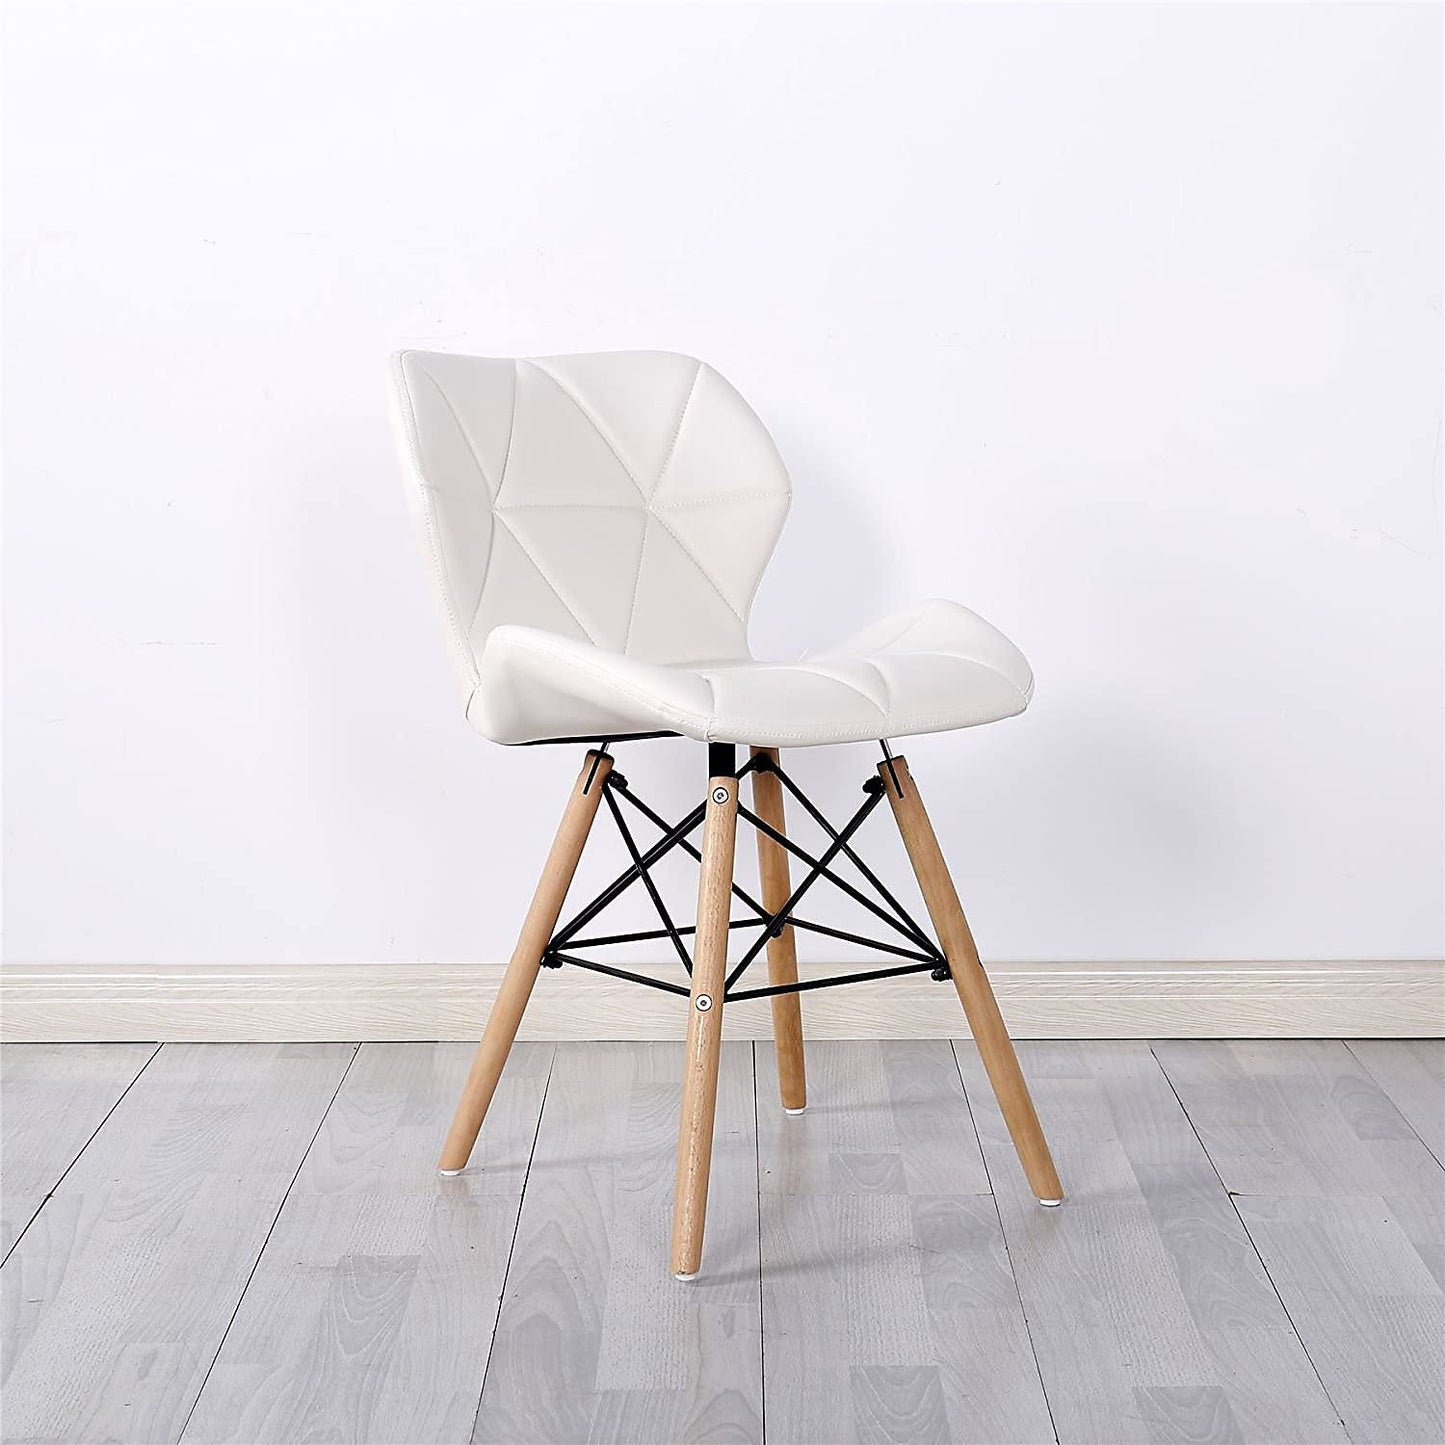 Leather chair 38 x 48 cm - STOK31